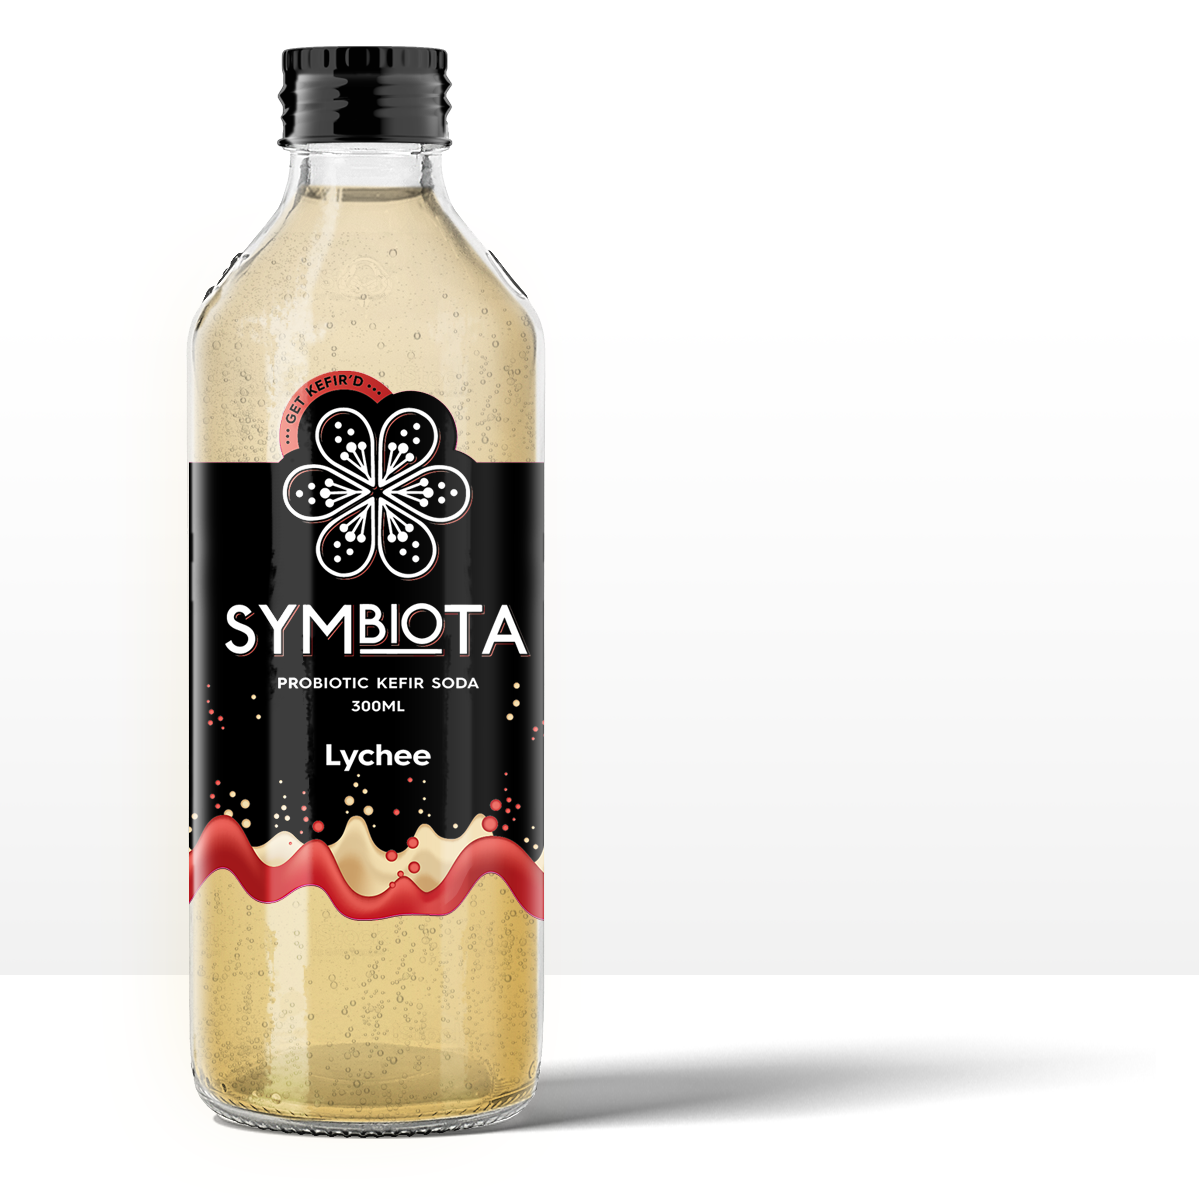 bottle of lychee probiotic kefir soda by symbiota